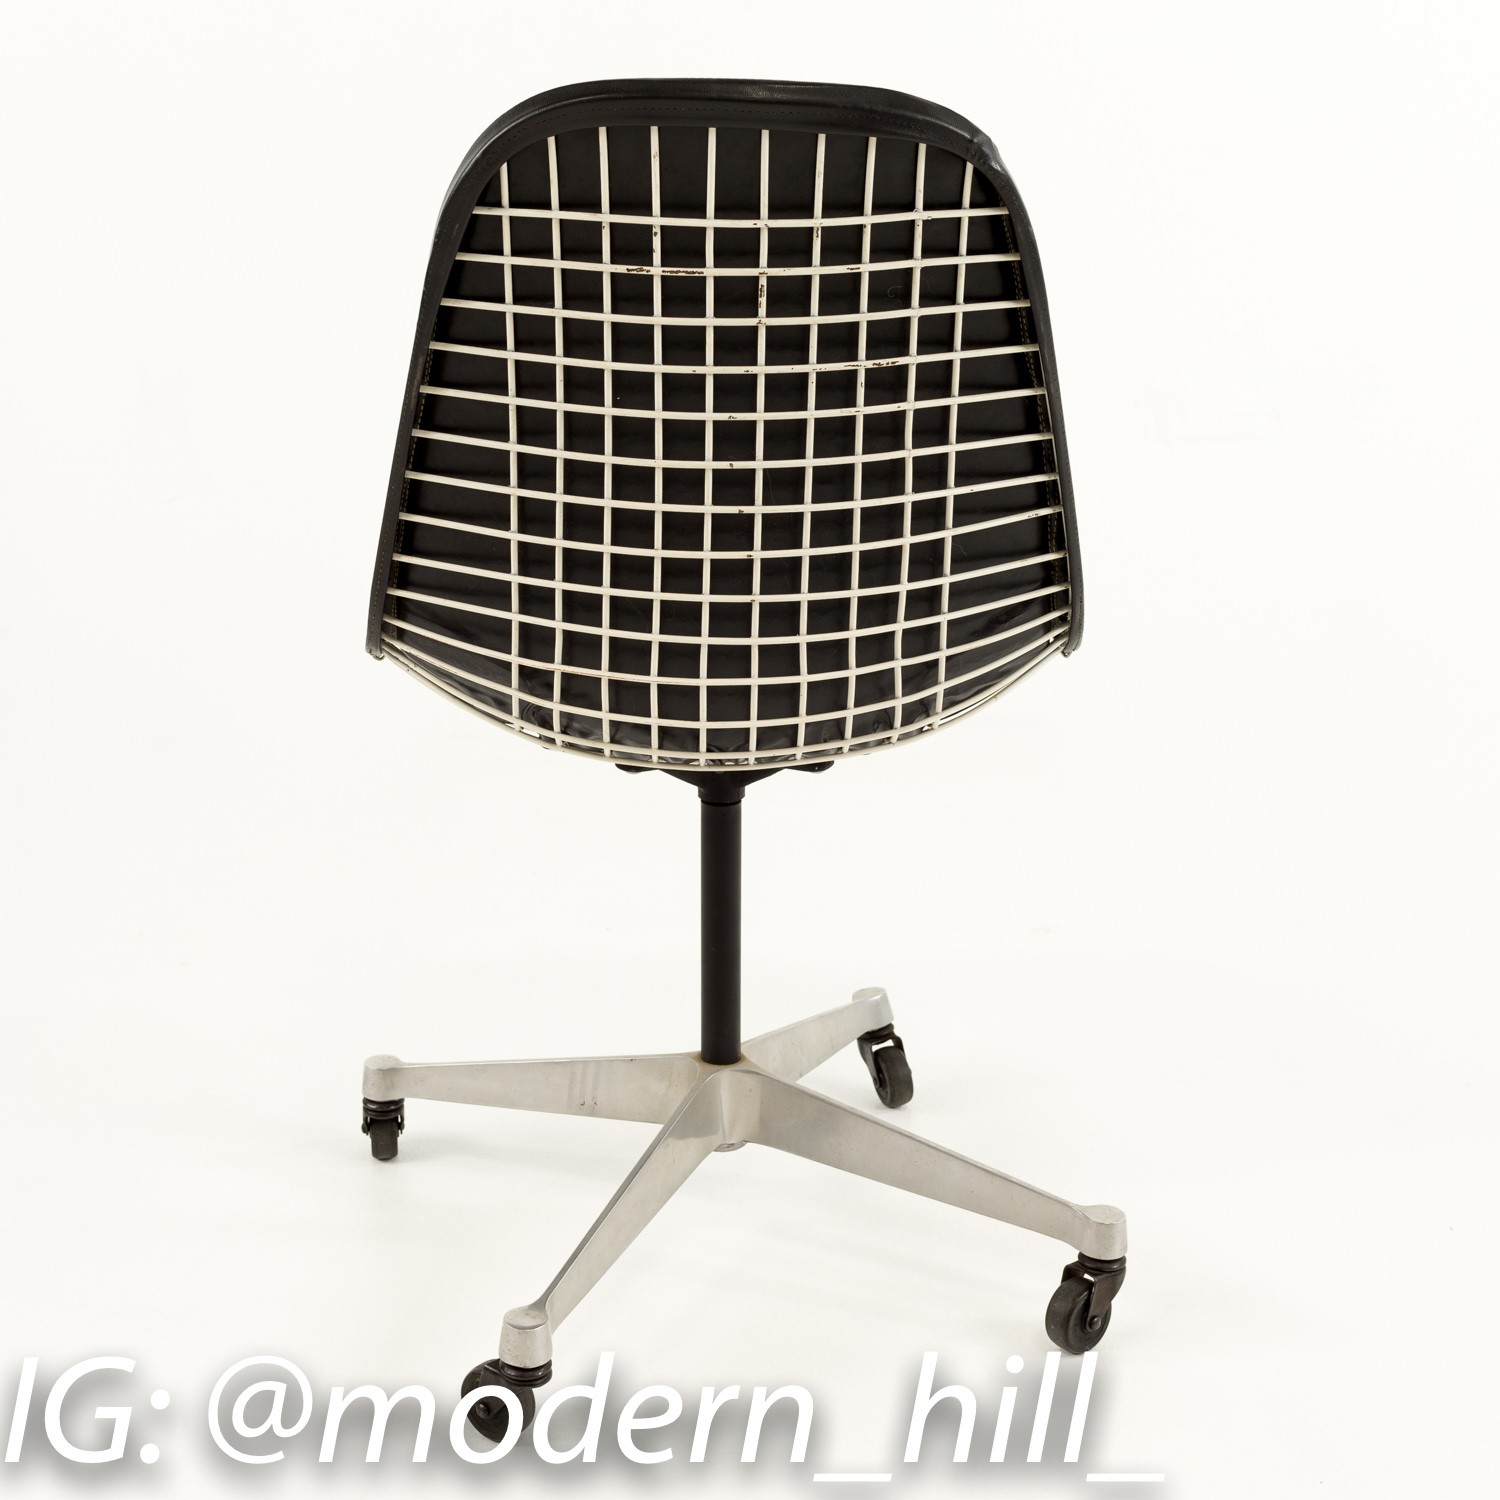 Herman Miller Eames Mid-century Modern Desk Chair